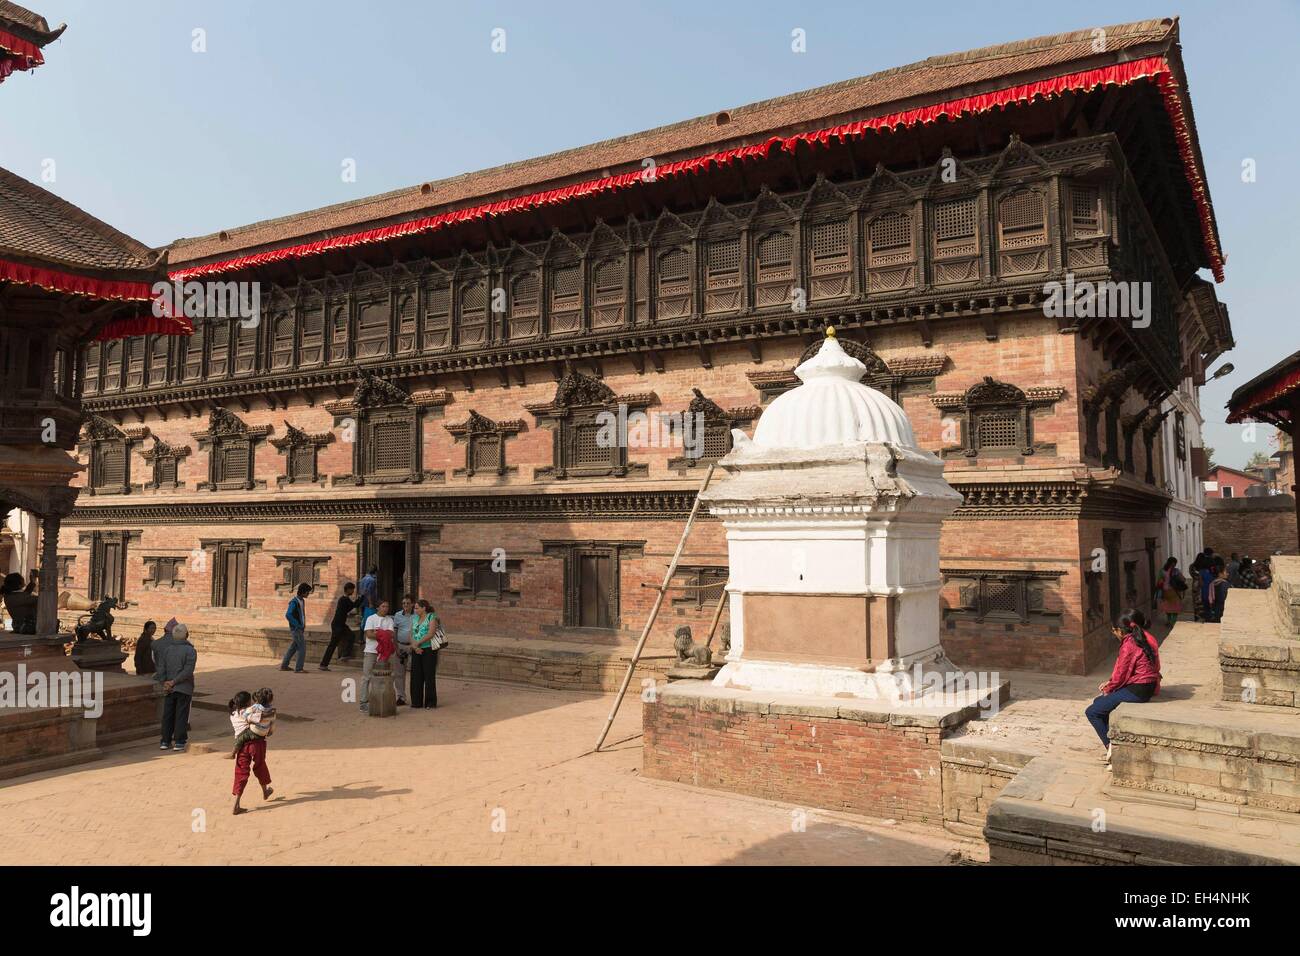 Nepal, Kathmandu-Tal, Bhaktapur, Weltkulturerbe von der UNESCO zum Weltkulturerbe der UNESCO, der Palast der 55 Fenster Stockfoto